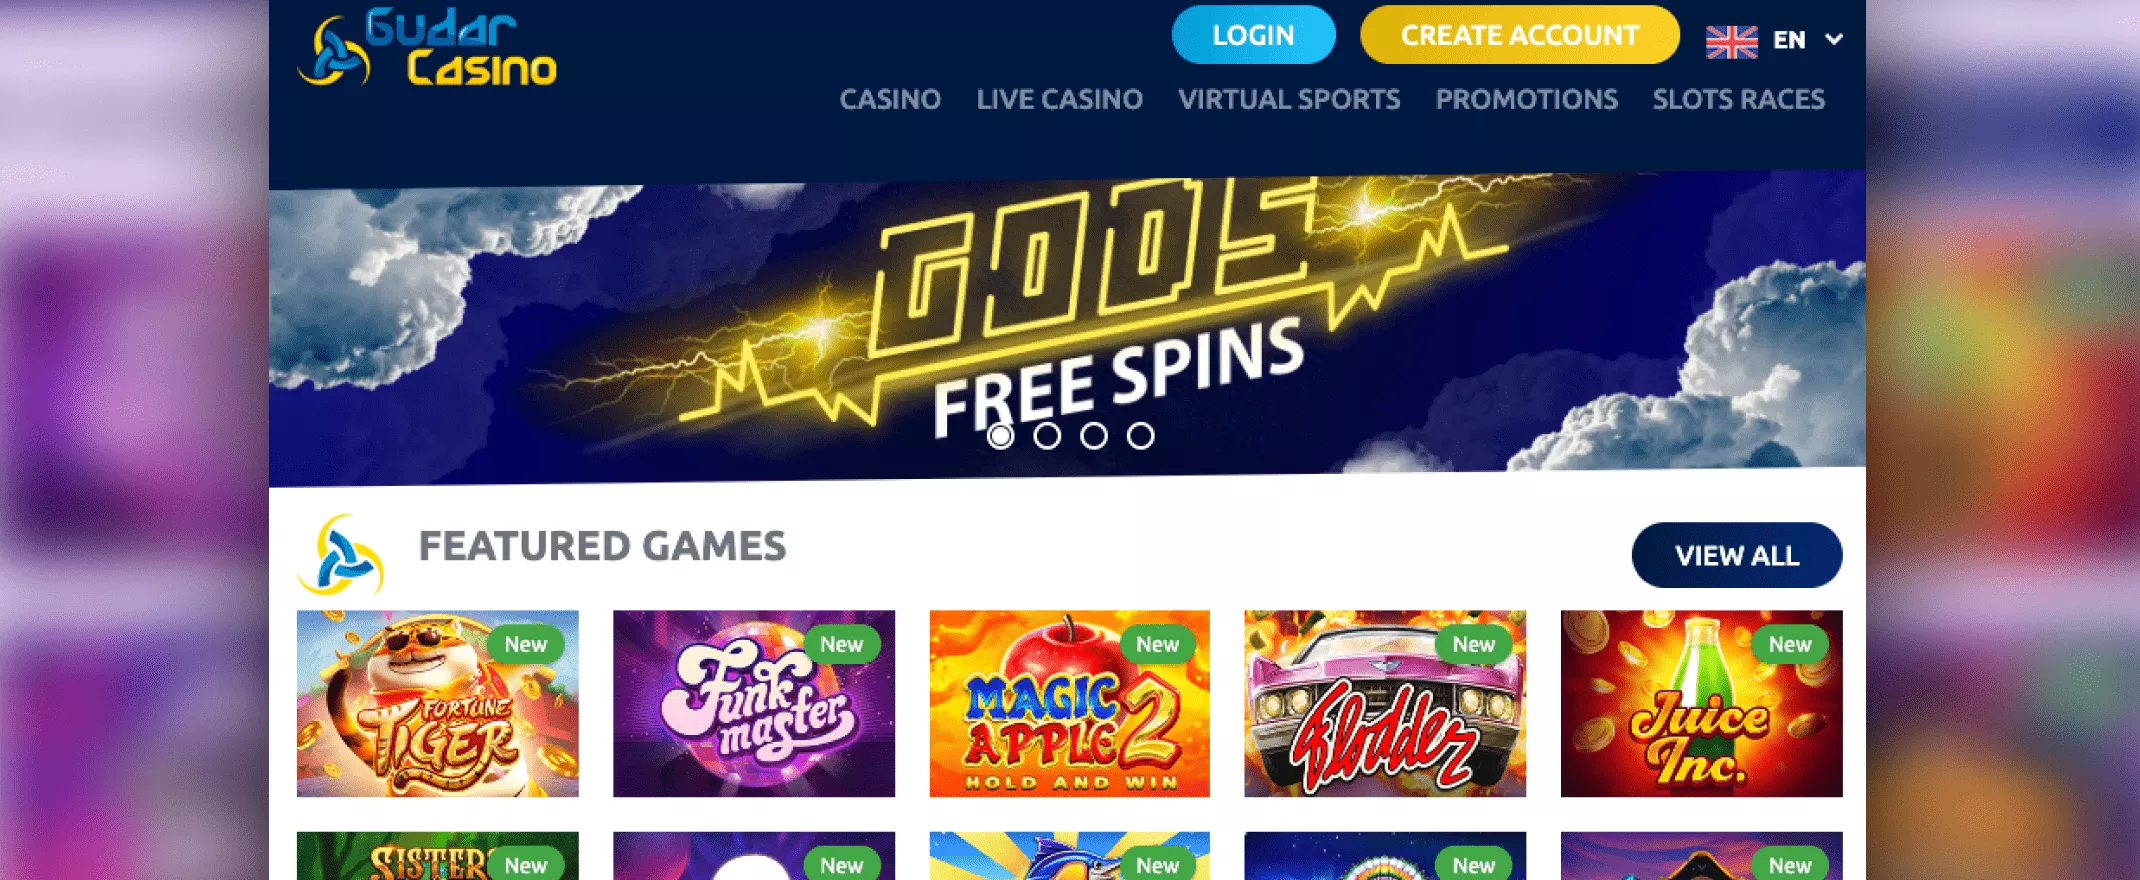 Homepage de Gudar Casino